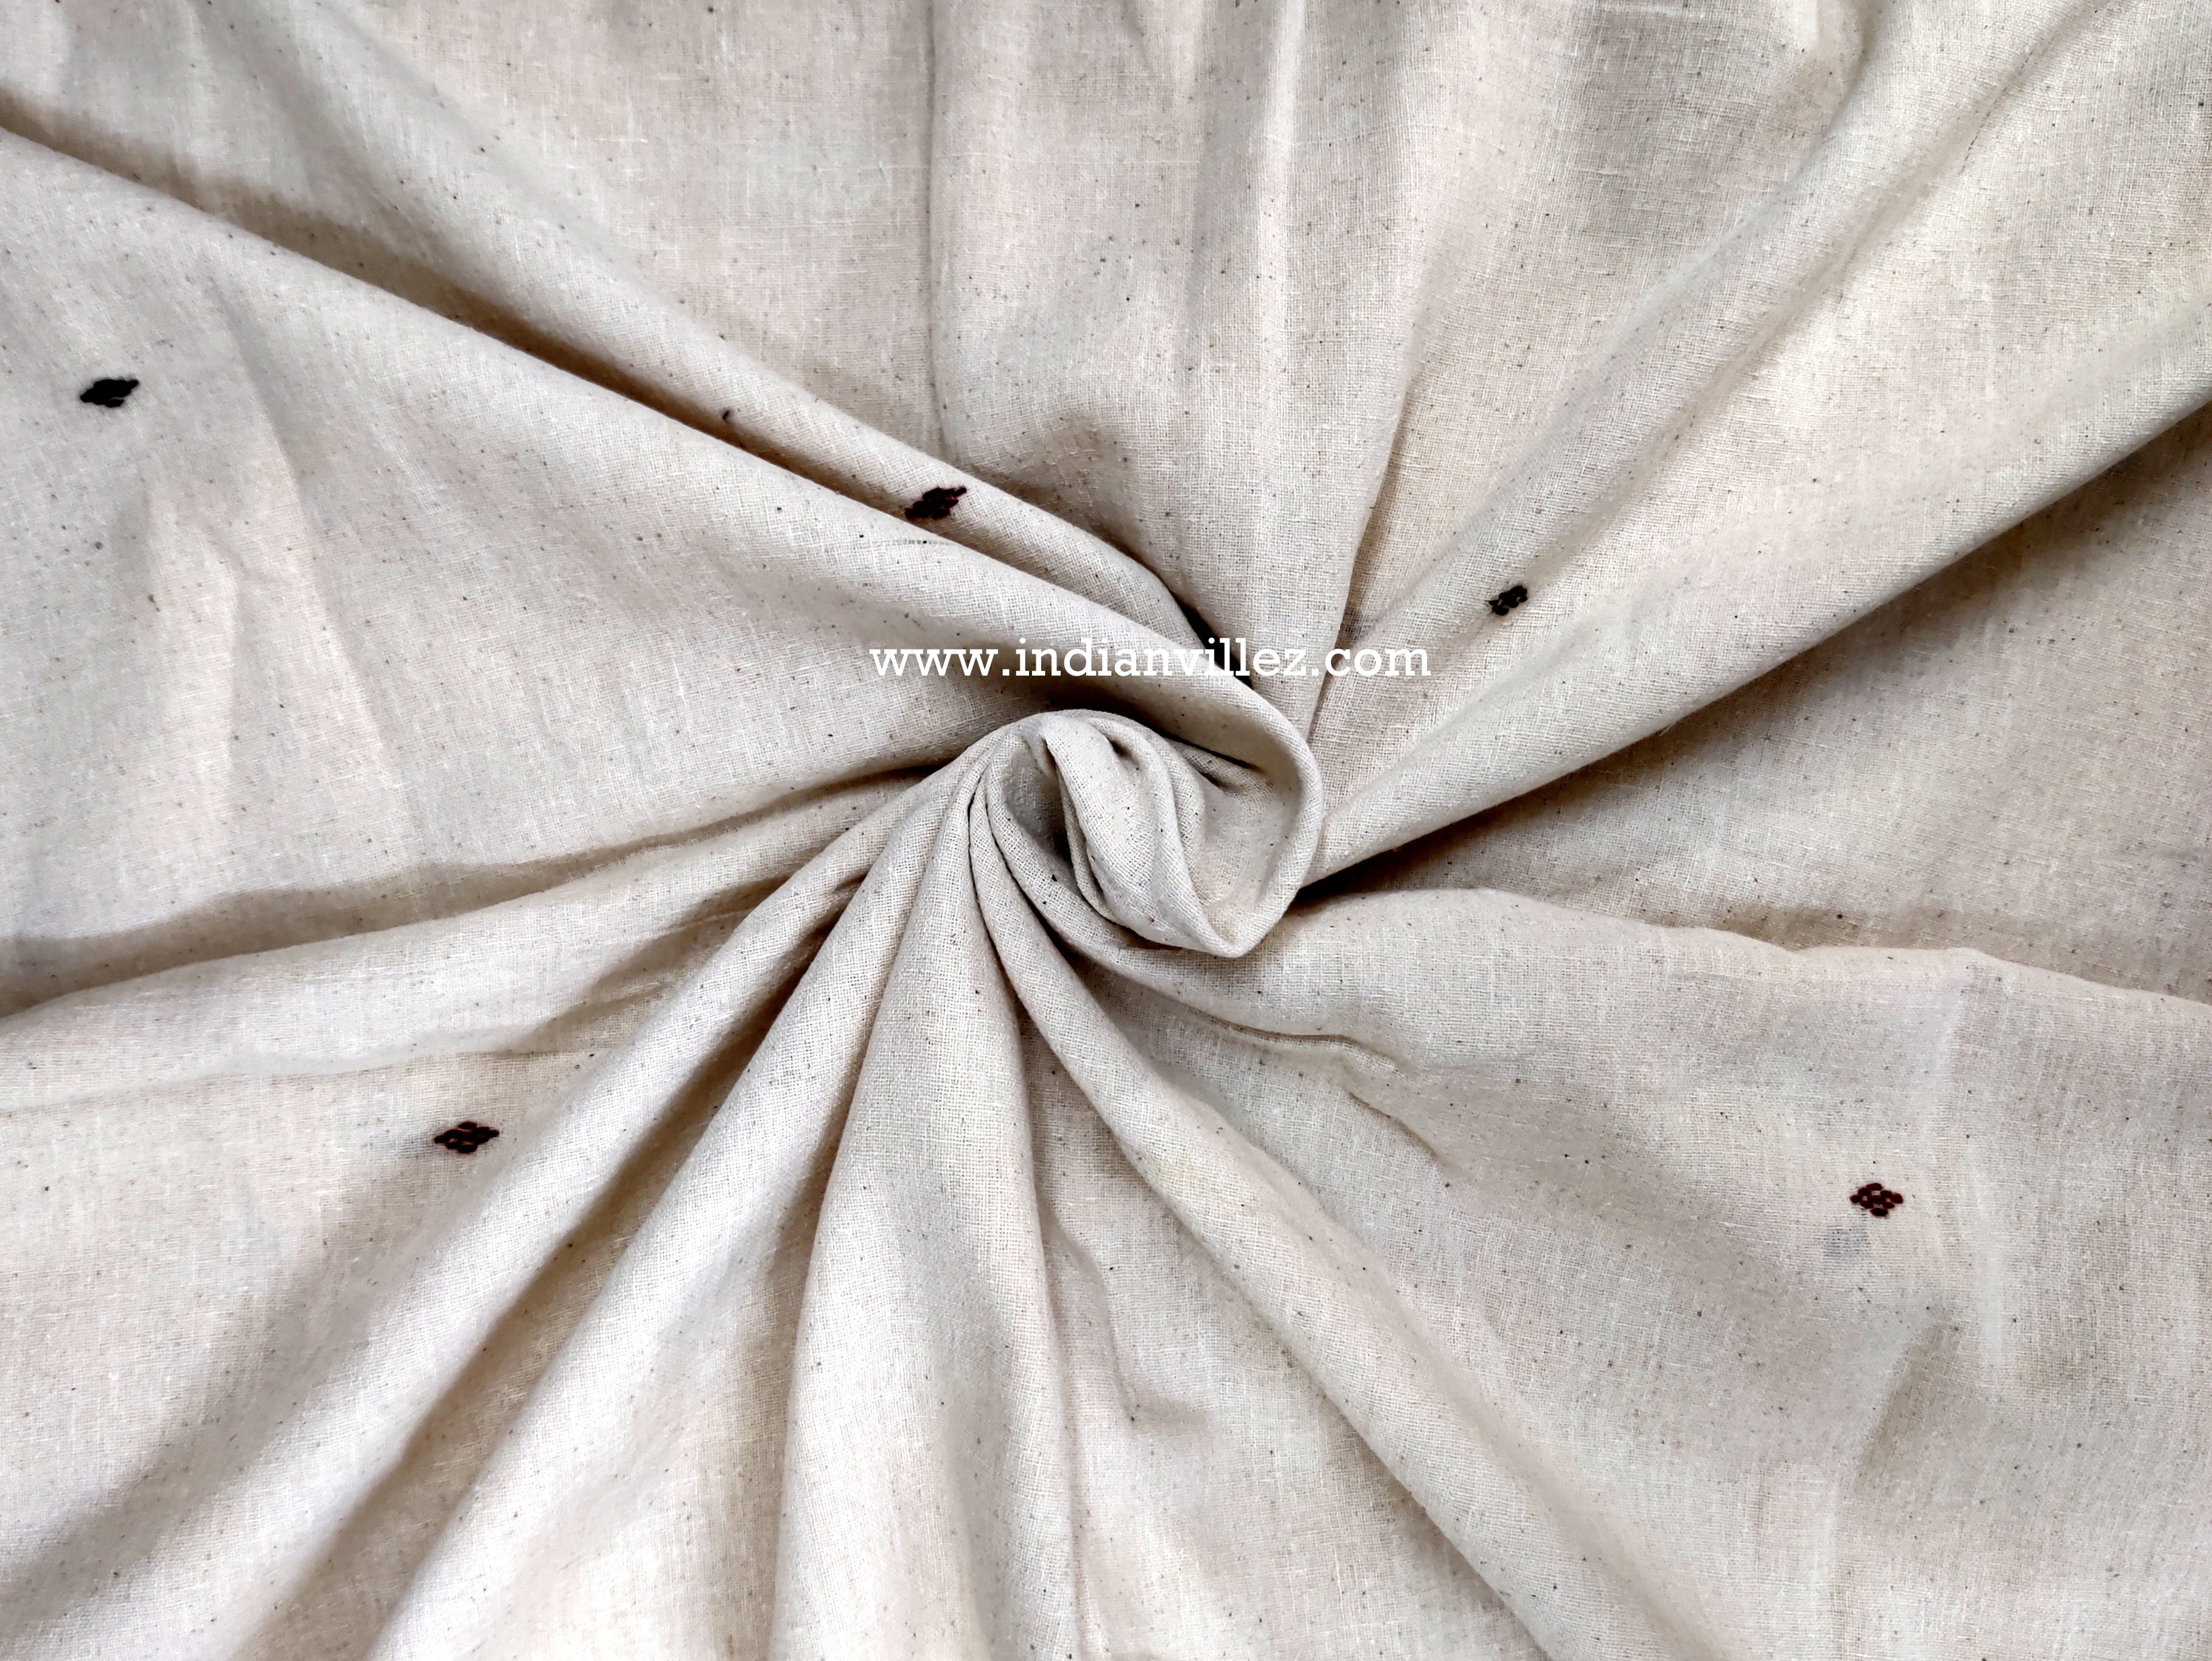 White with Diamond Motifs Kotpad Handloom Fabric - IndianVillèz